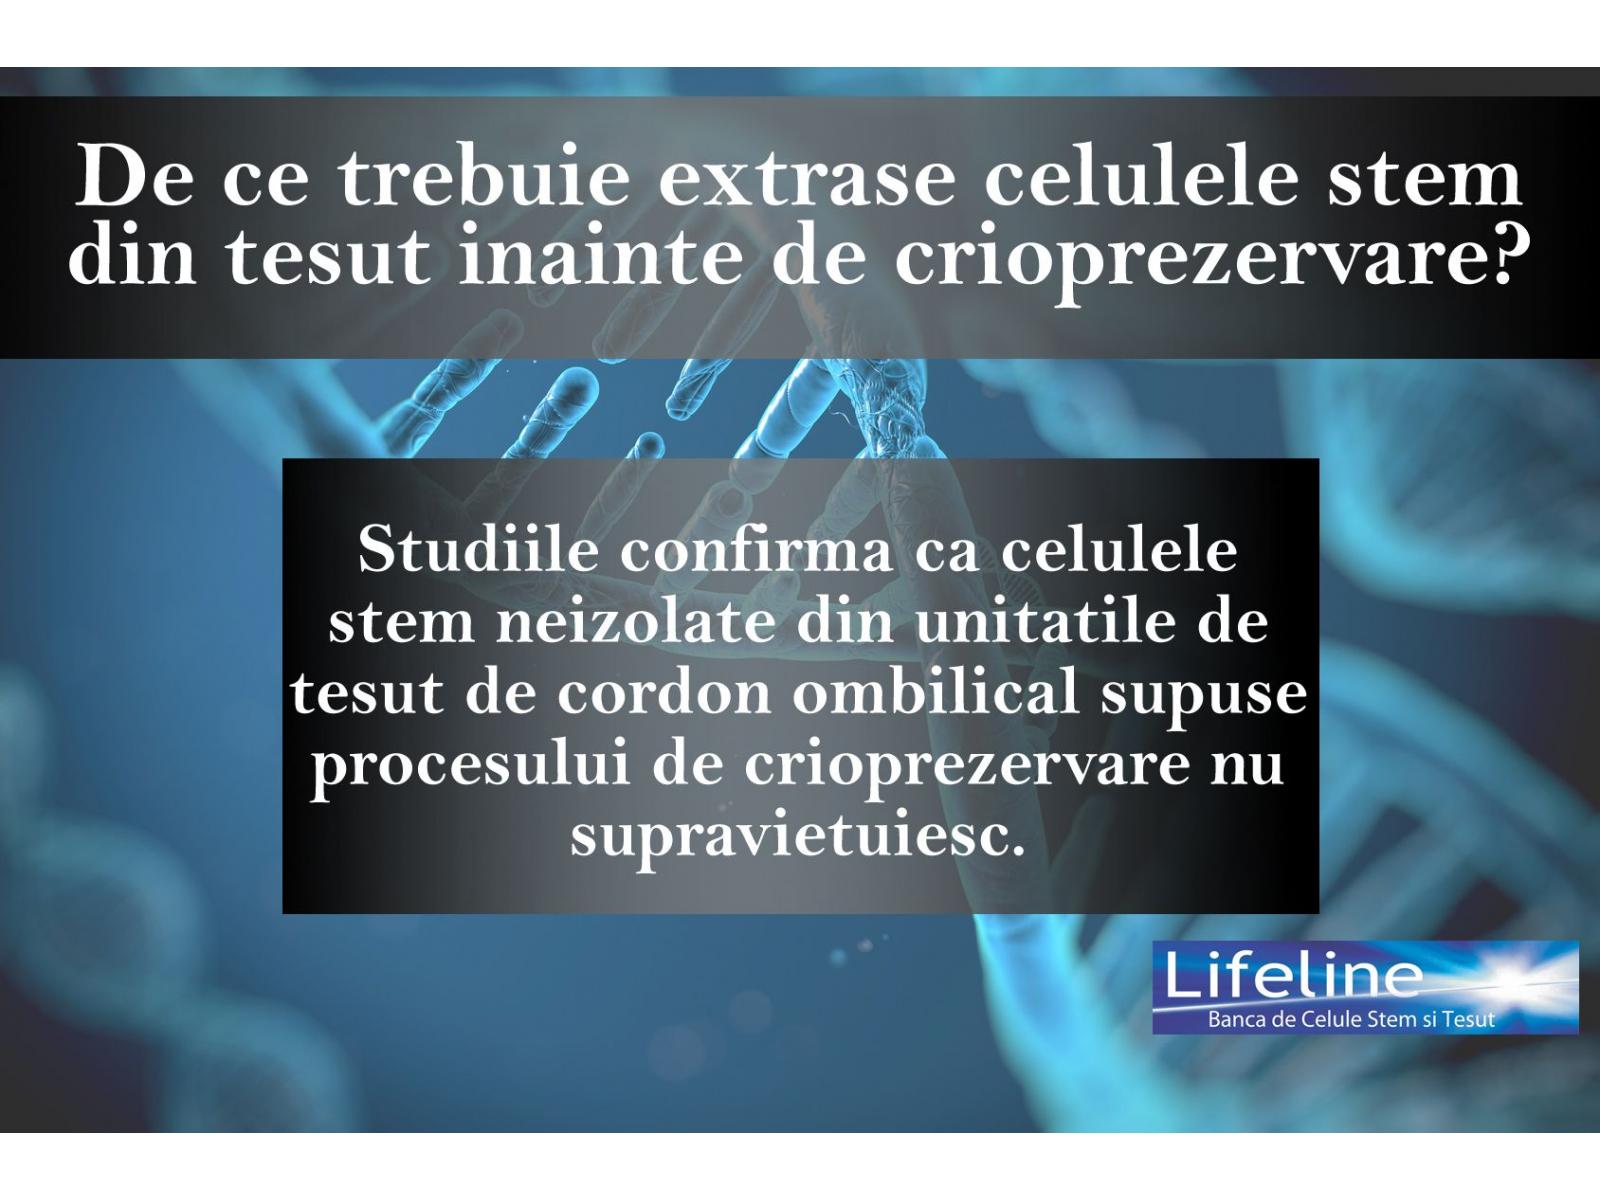 Lifeline Romania - extragerea_celulelor_stem.jpg